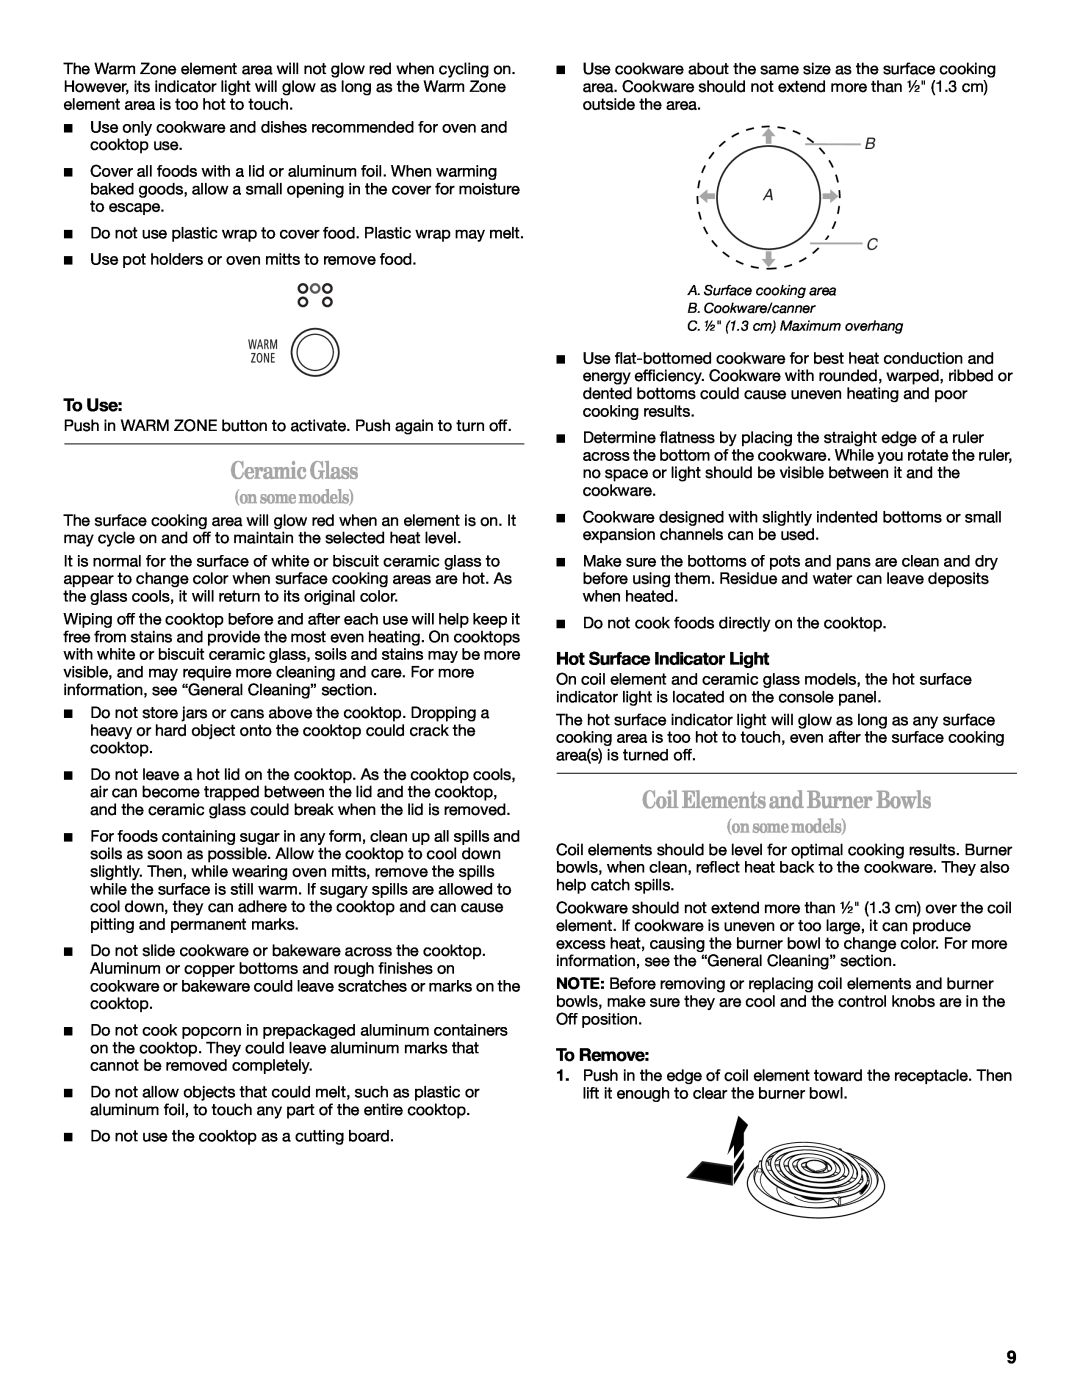 Whirlpool 9763001 manual CeramicGlass, Coil ElementsandBurner Bowls, To Use, Hot Surface Indicator Light, To Remove, B A C 